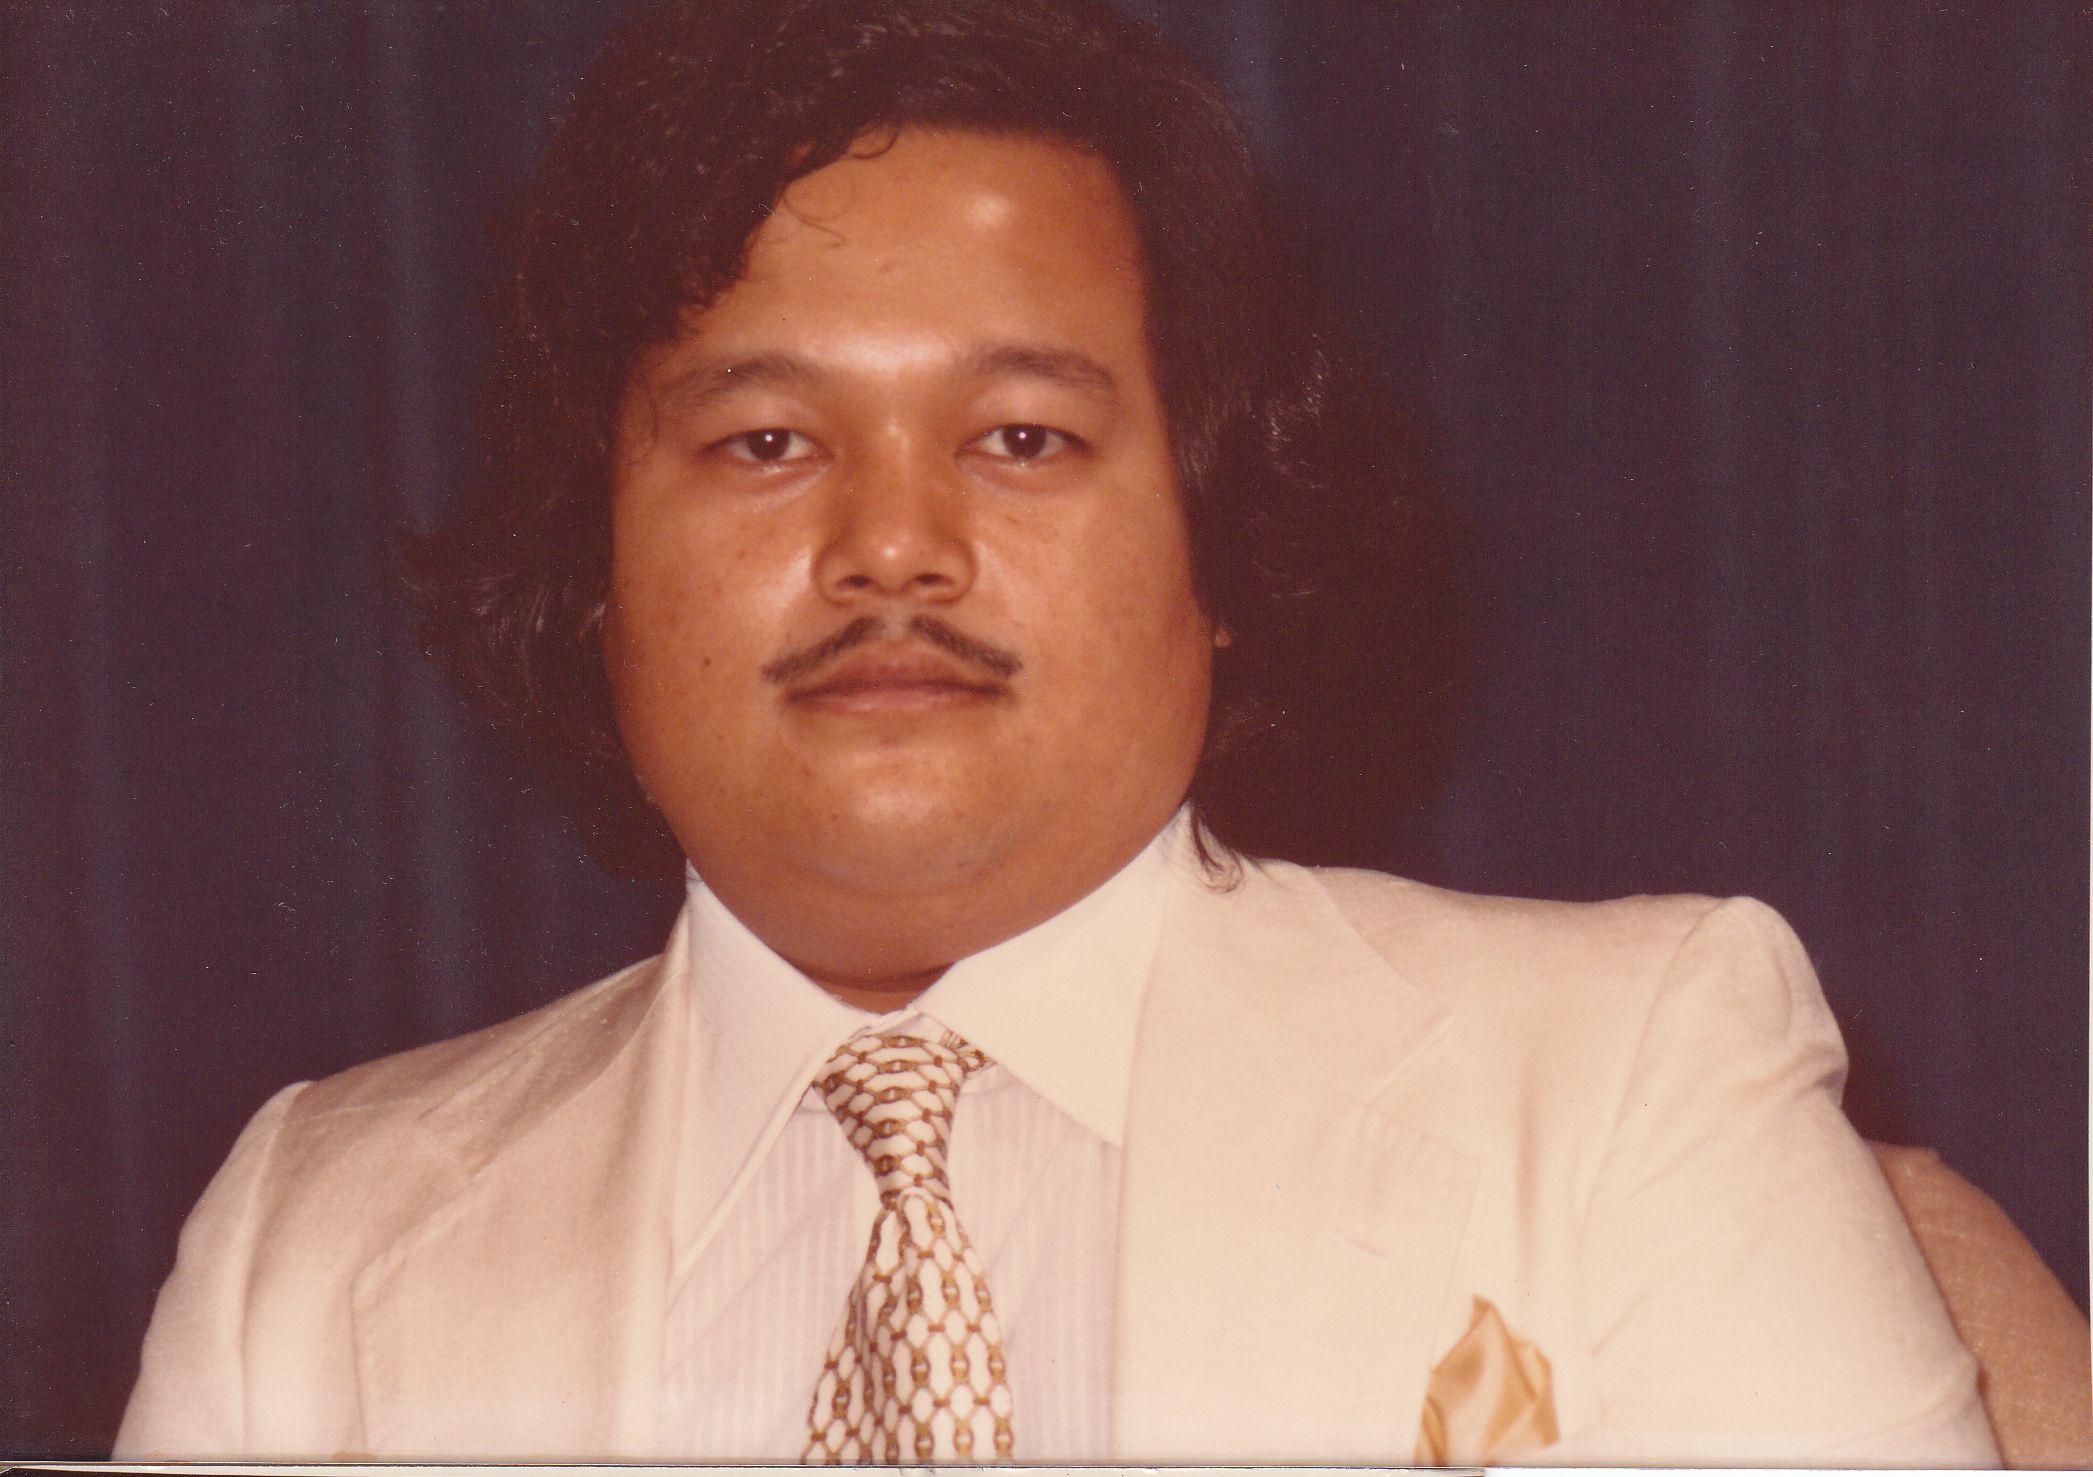 Prem Rawat (Maharaji) Photo On Stage In White Suit circa 1979